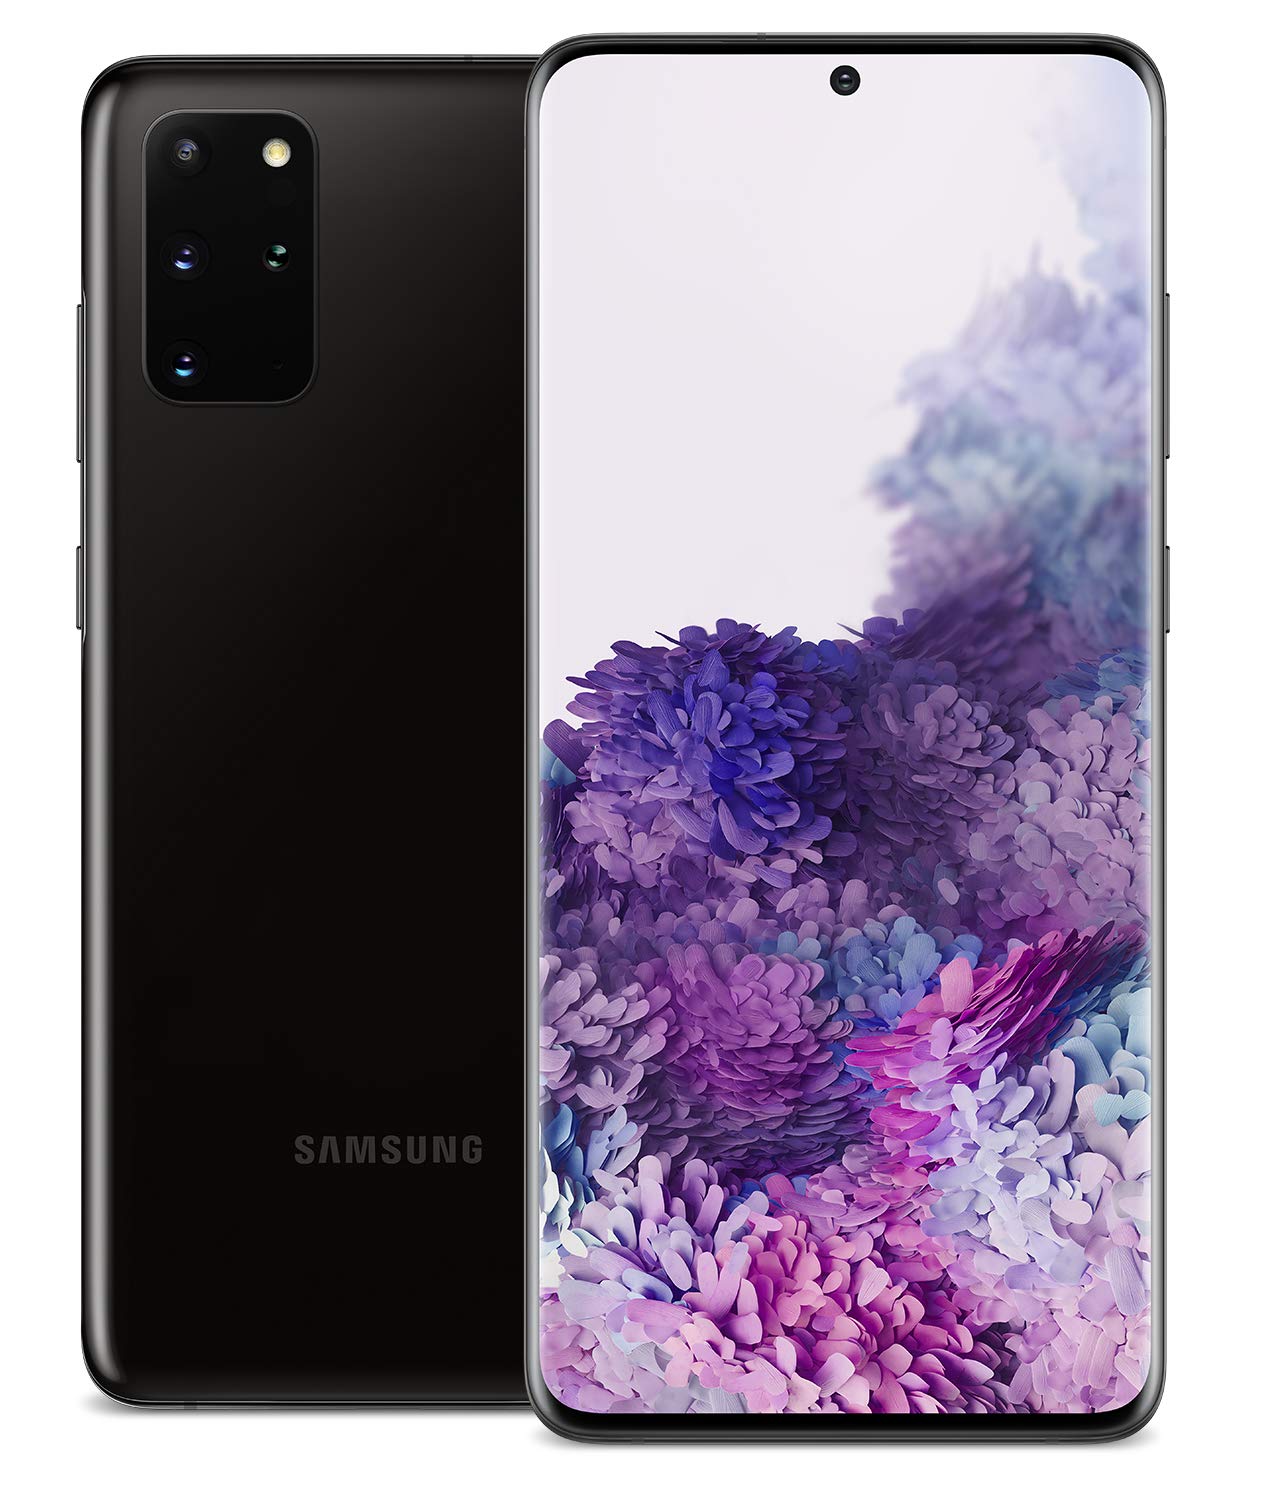 Samsung Galaxy S20+ Unlocked USA 5G Cell Phone - 6.7-in 128GB Black